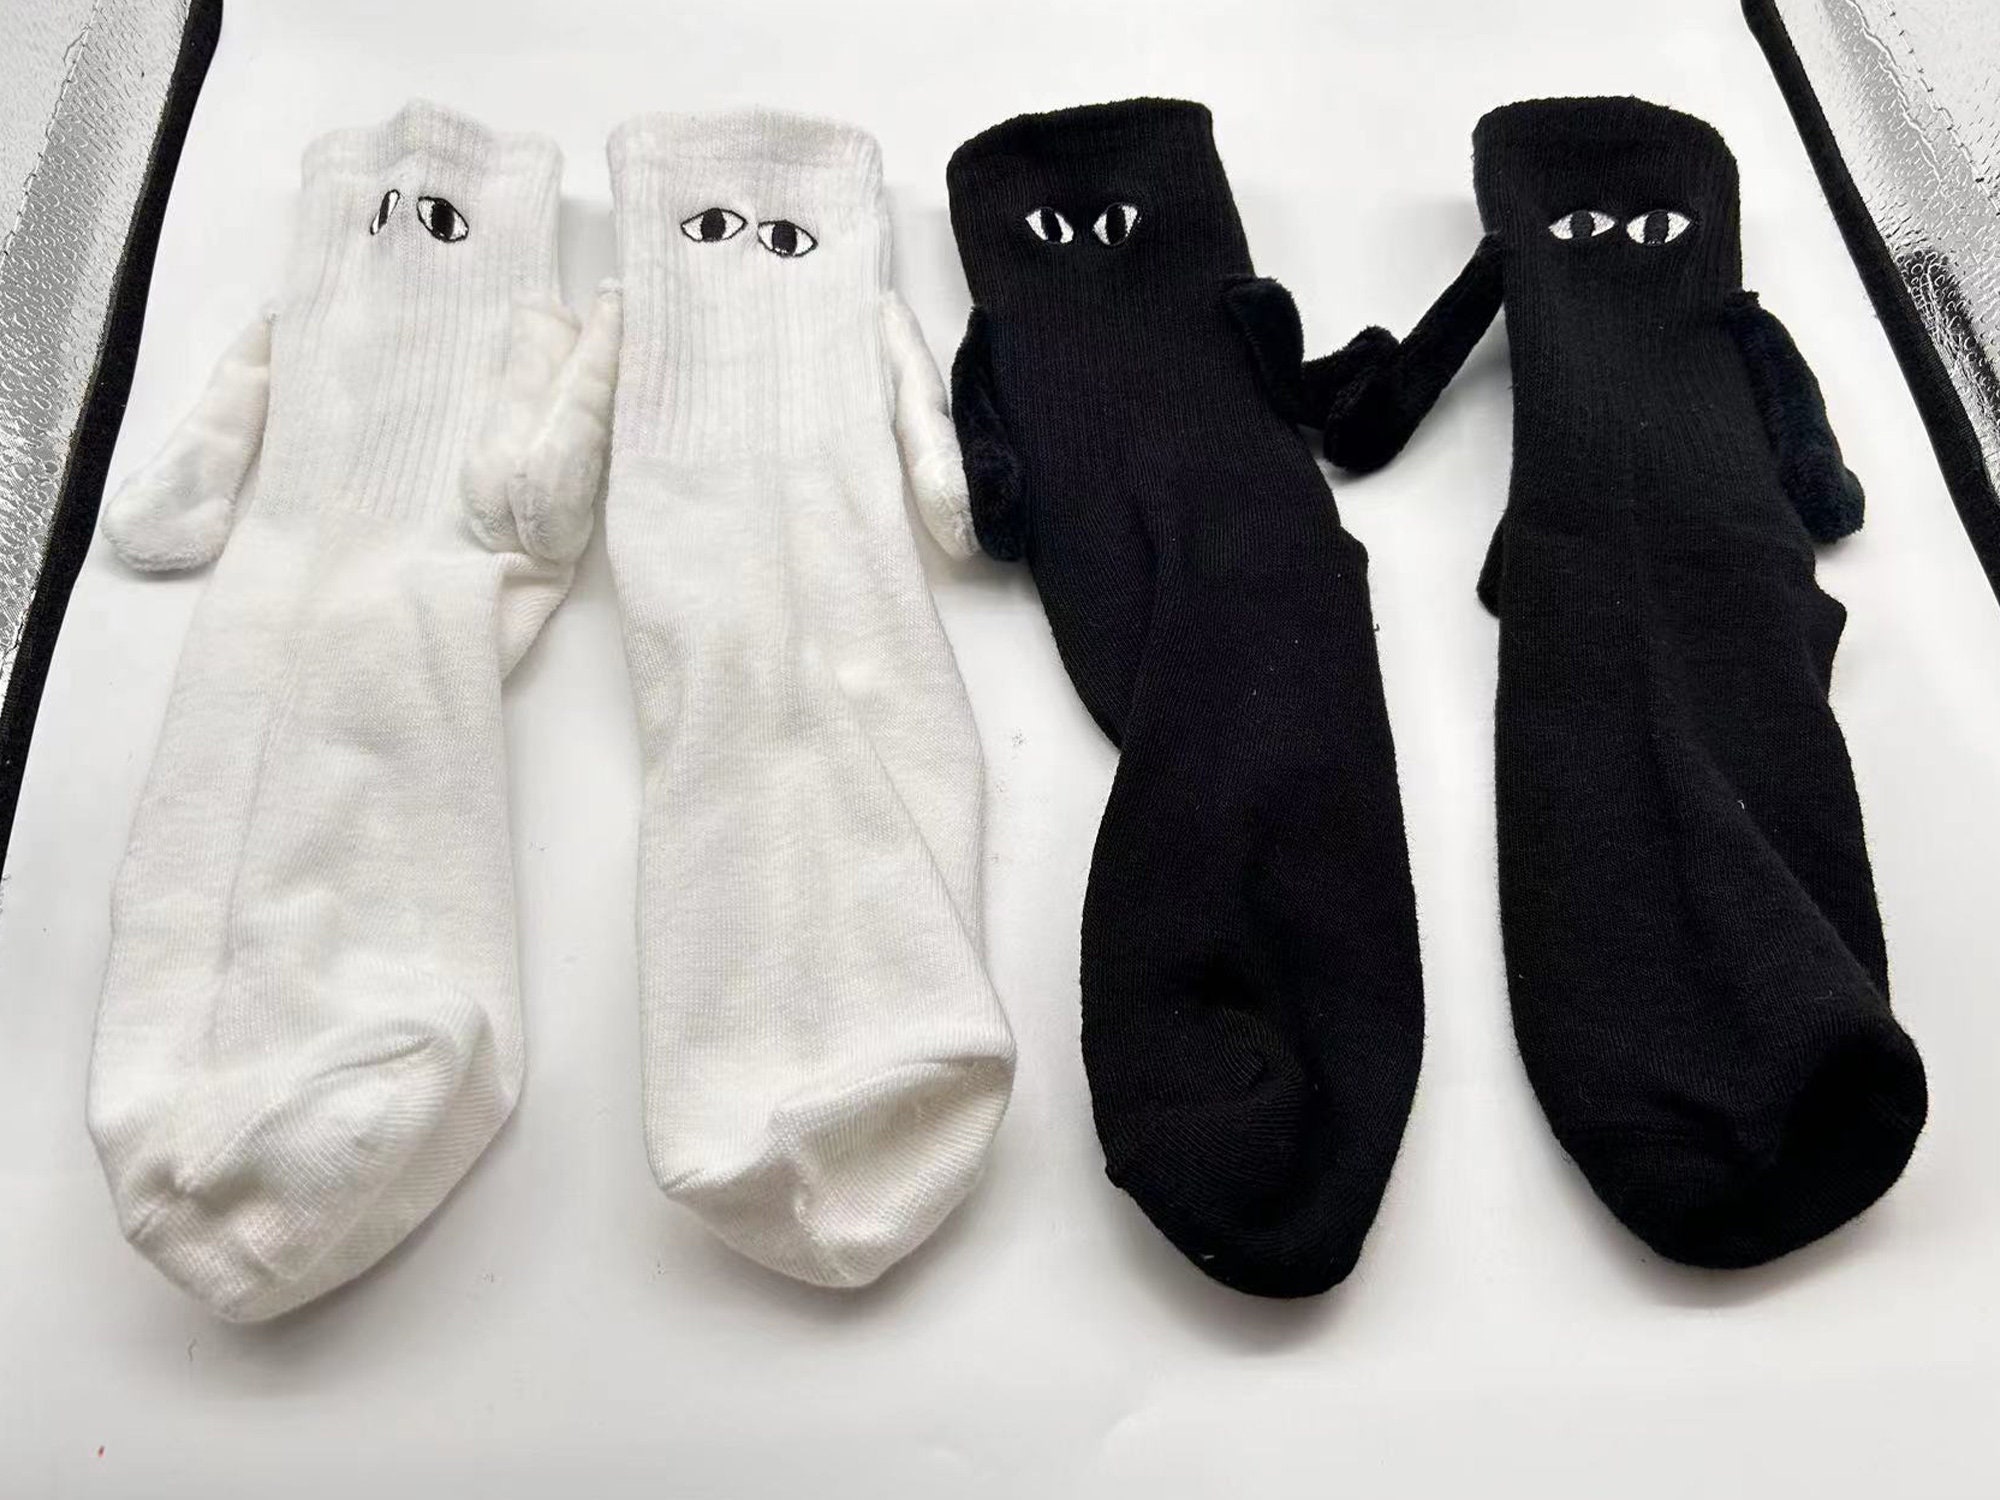 Las mejores Matching socks jajajajjaja